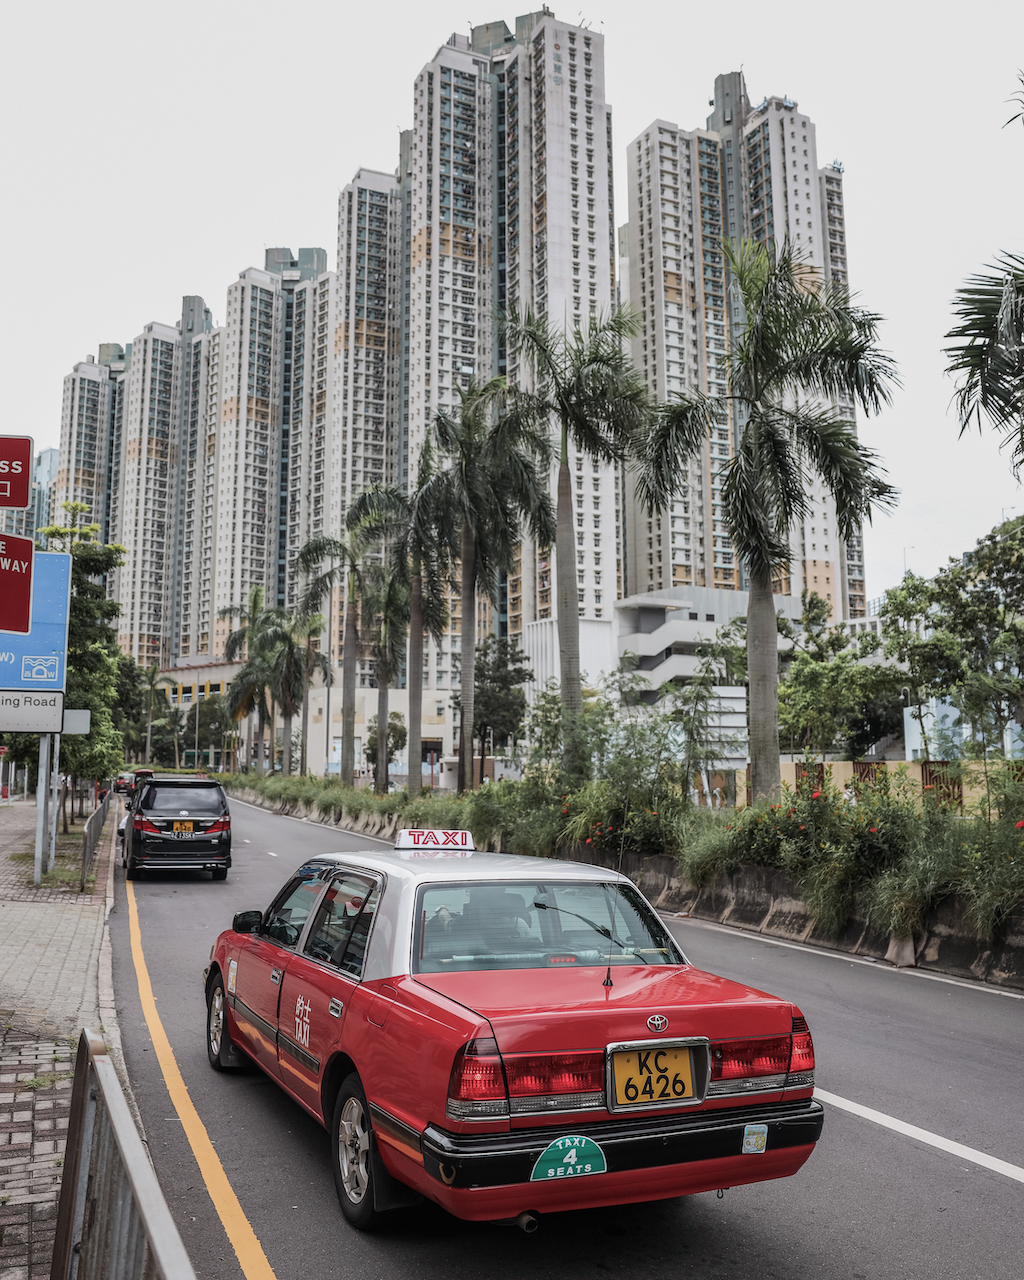 Taxi traditionnel devant les immeubles - Hong Kong